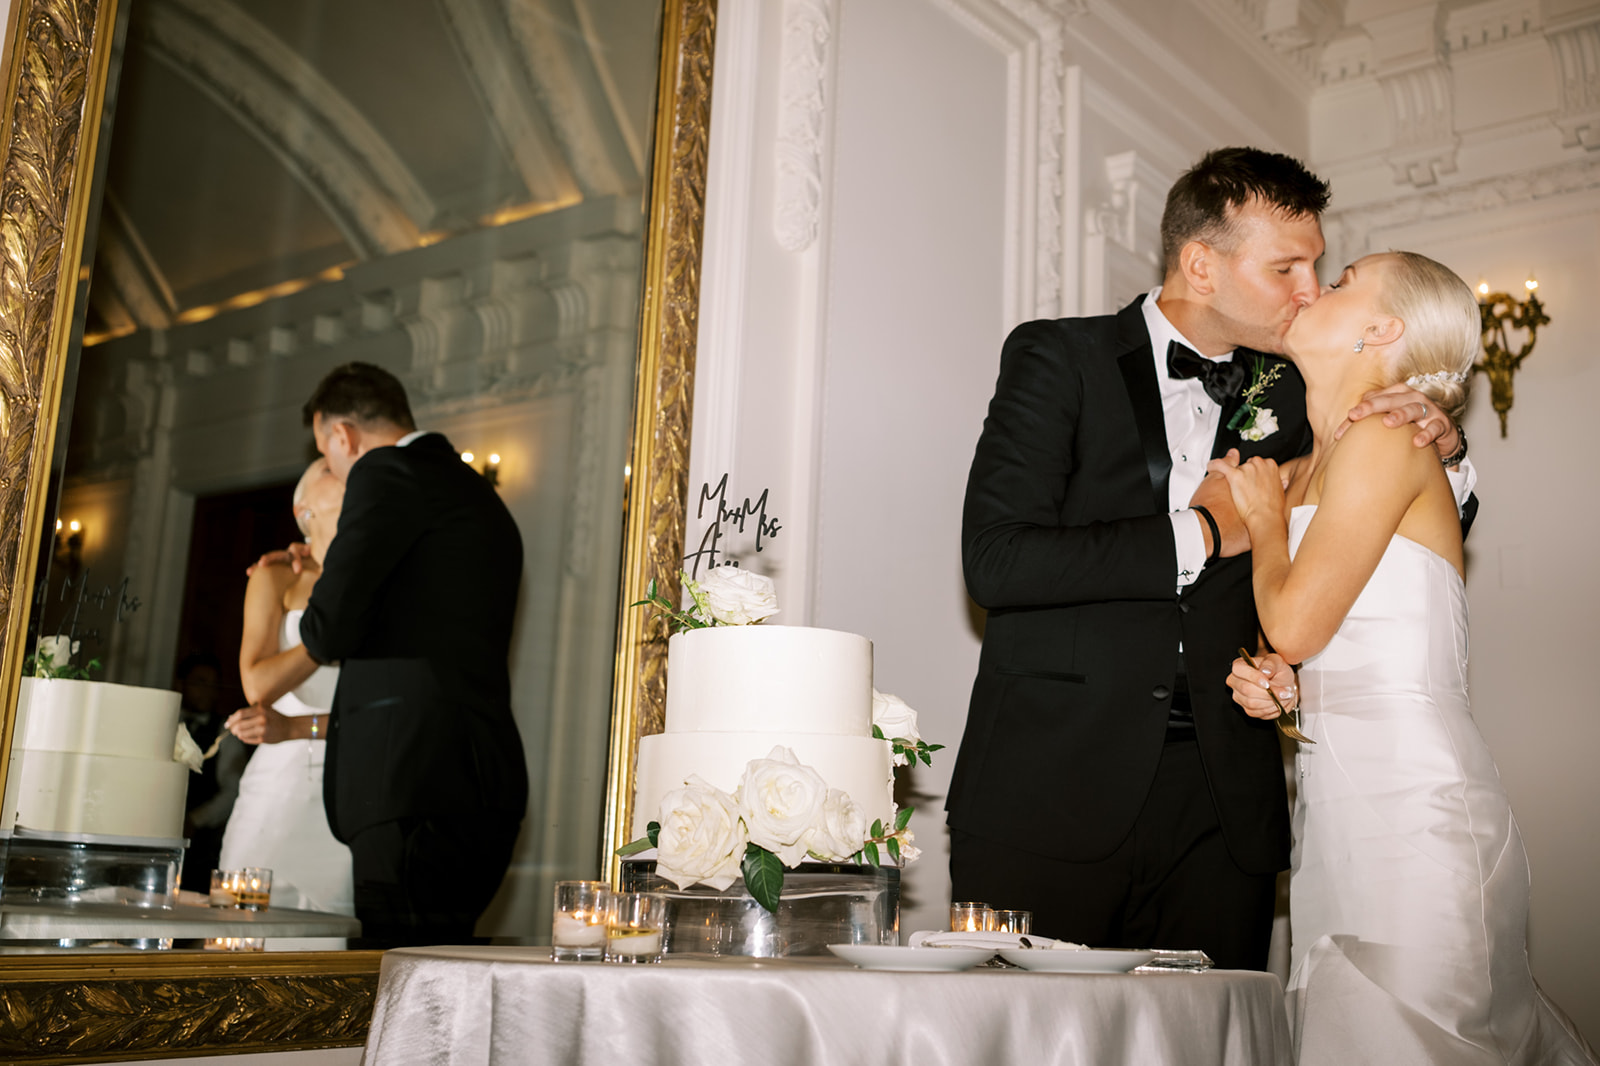 Bride and groom kiss after cutting wedding cake at DAR in Washington DC wedding